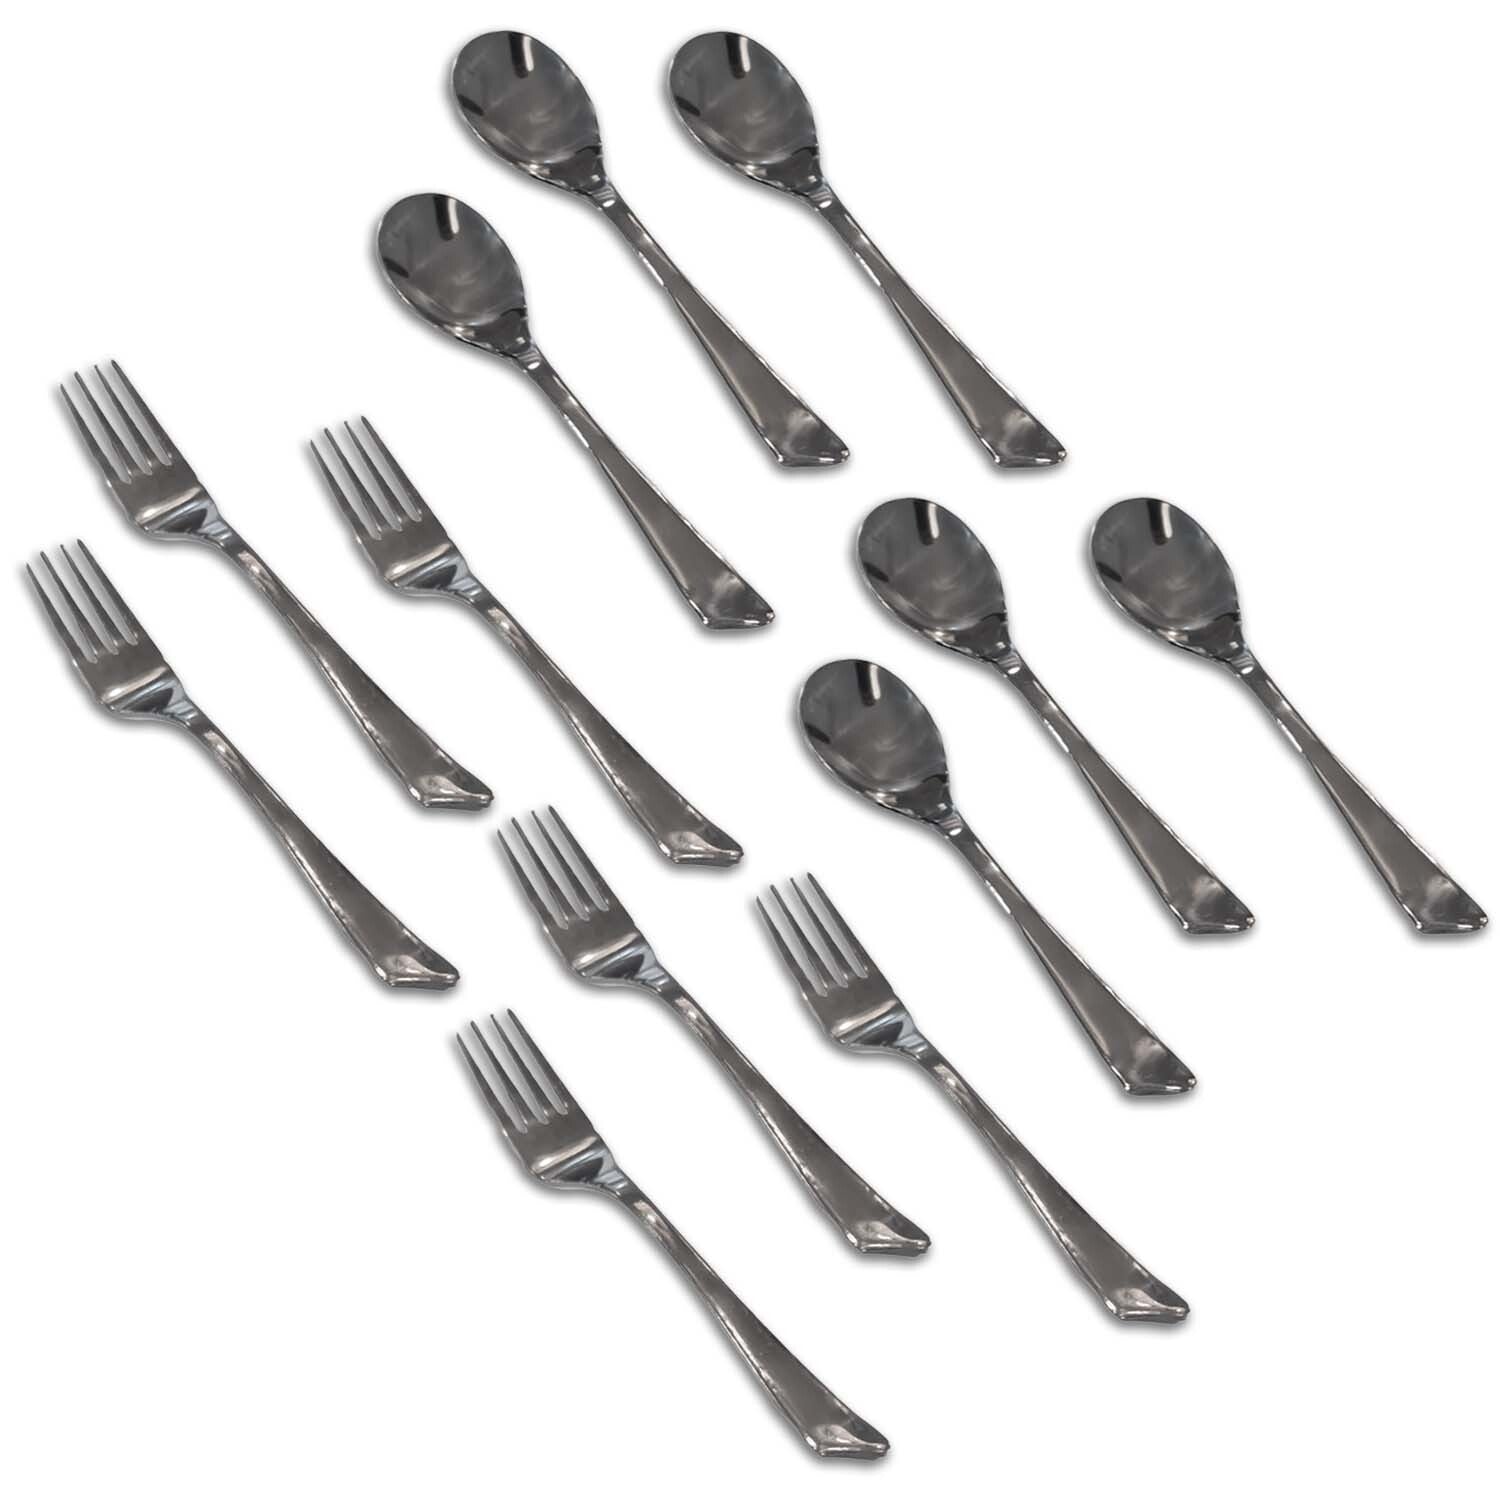 Rusabl - Spoons & Forks - Set of 12